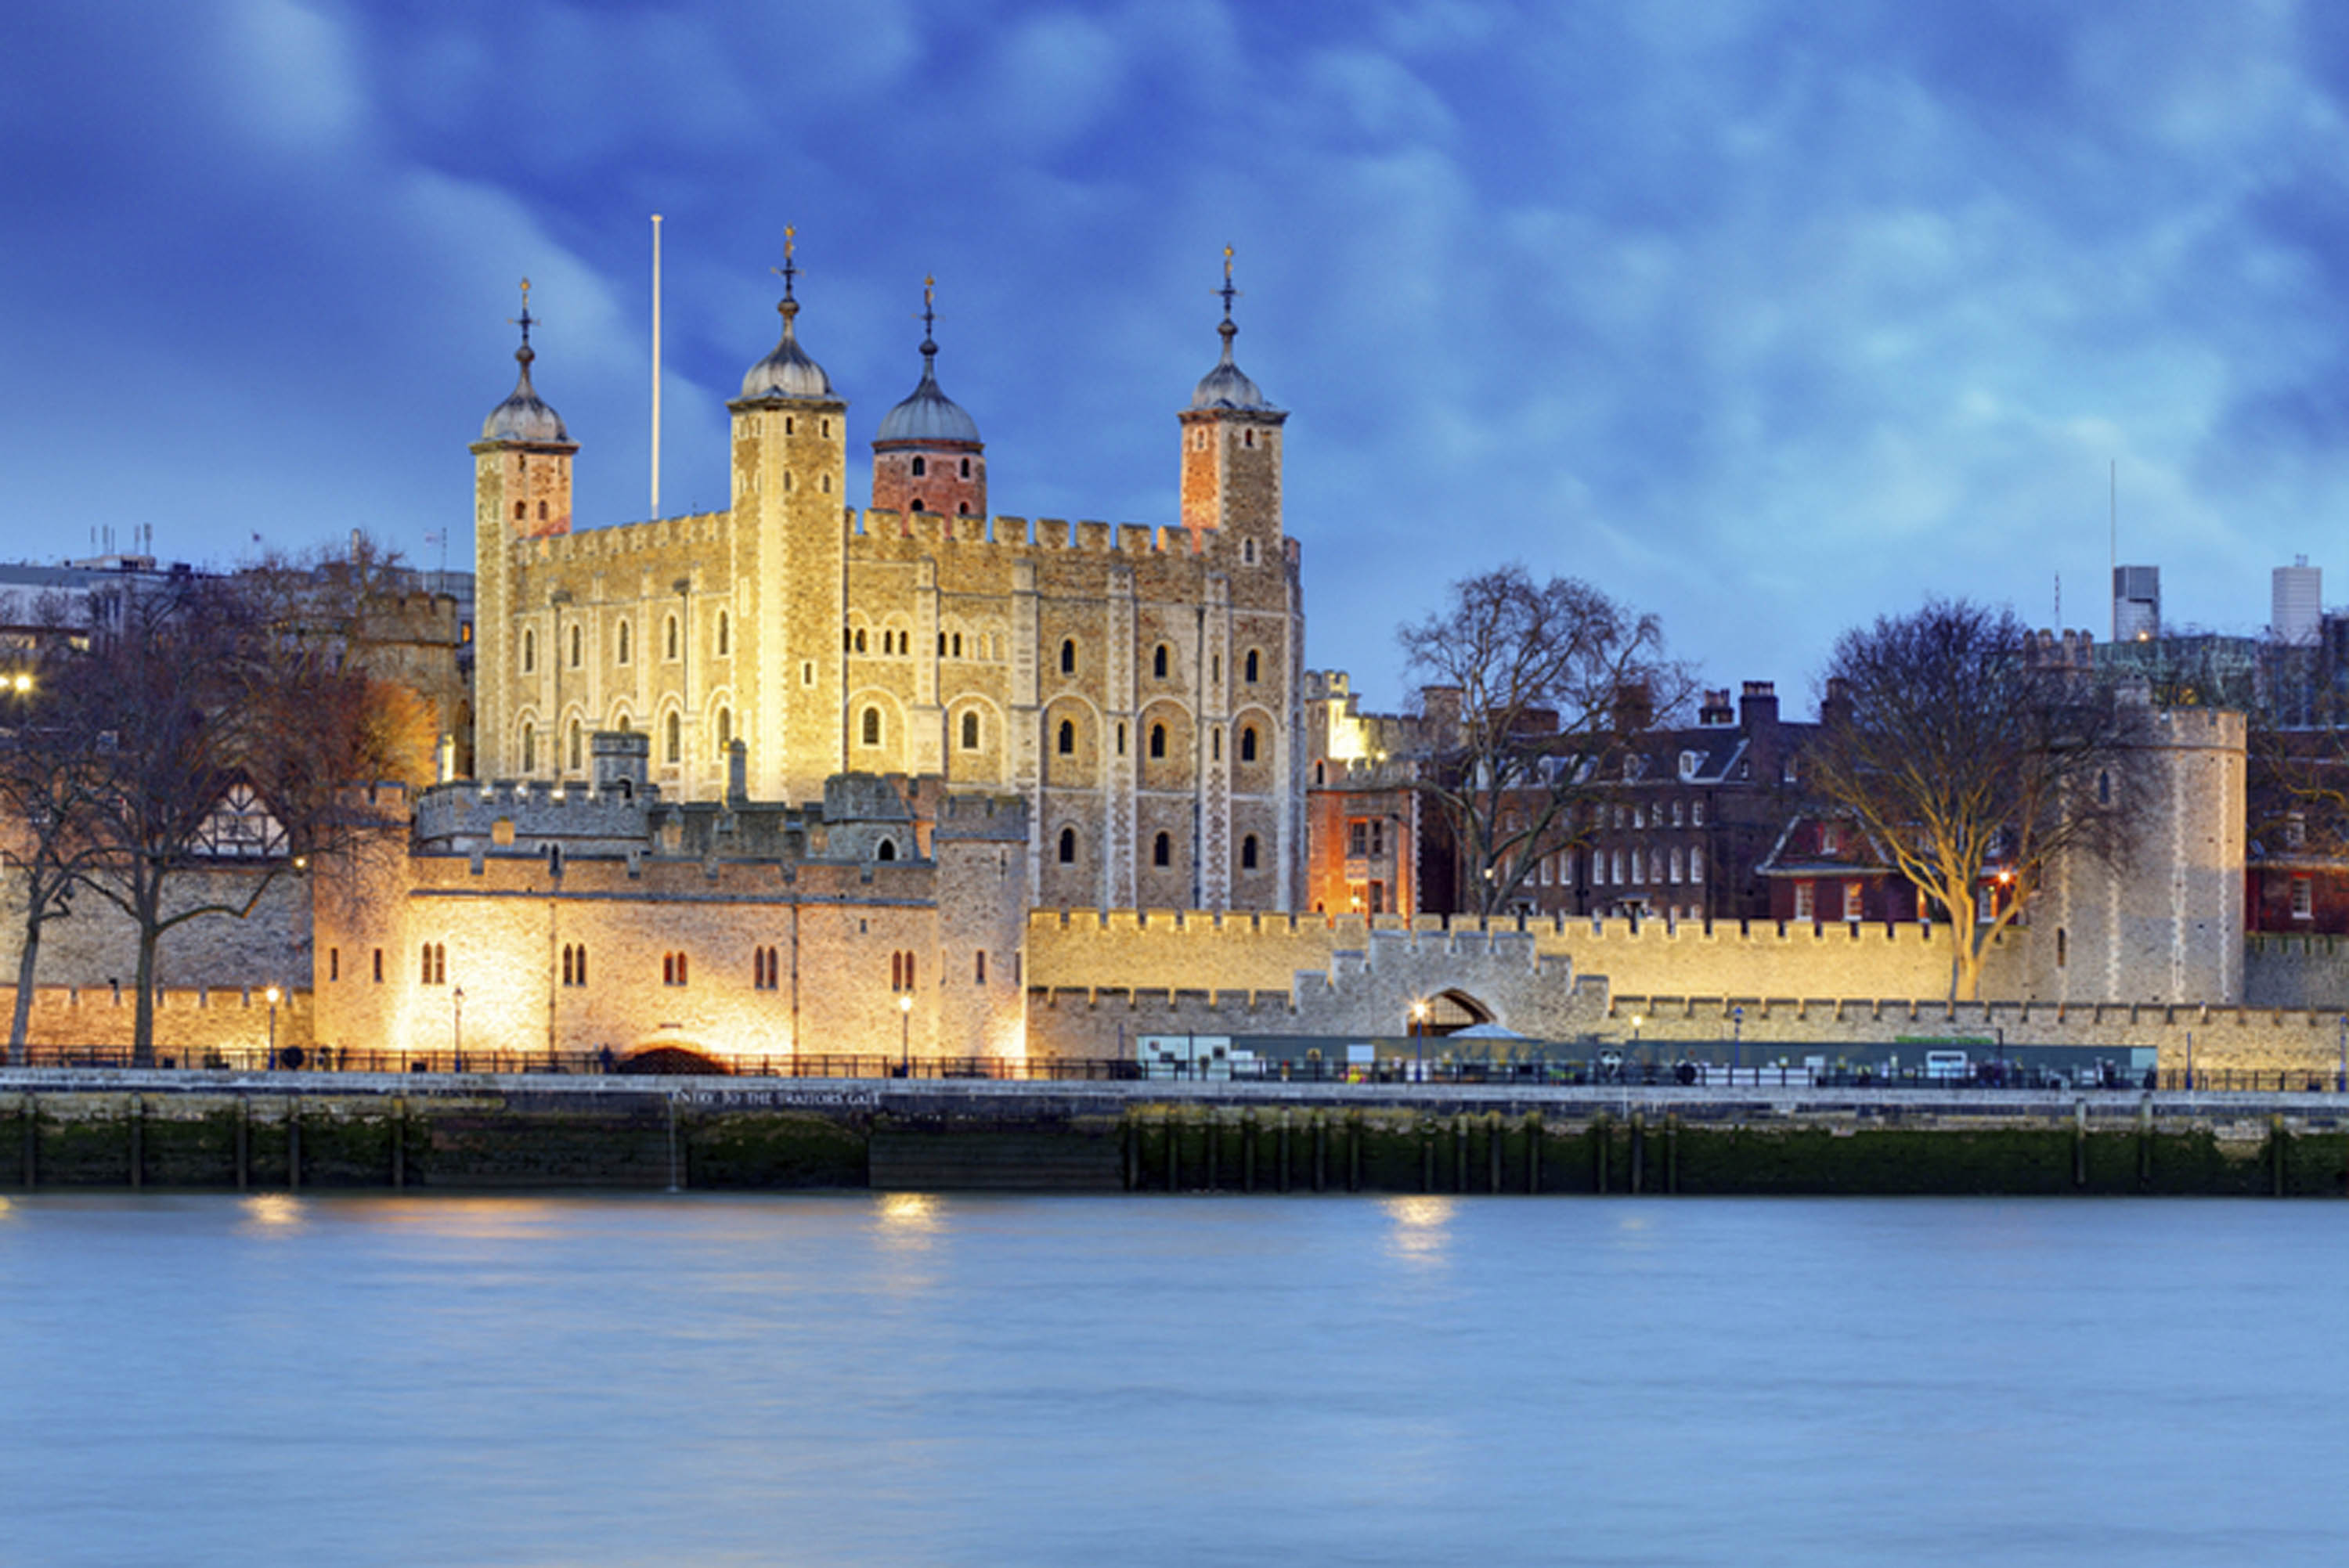 Tower Of London At Night Worldstrides